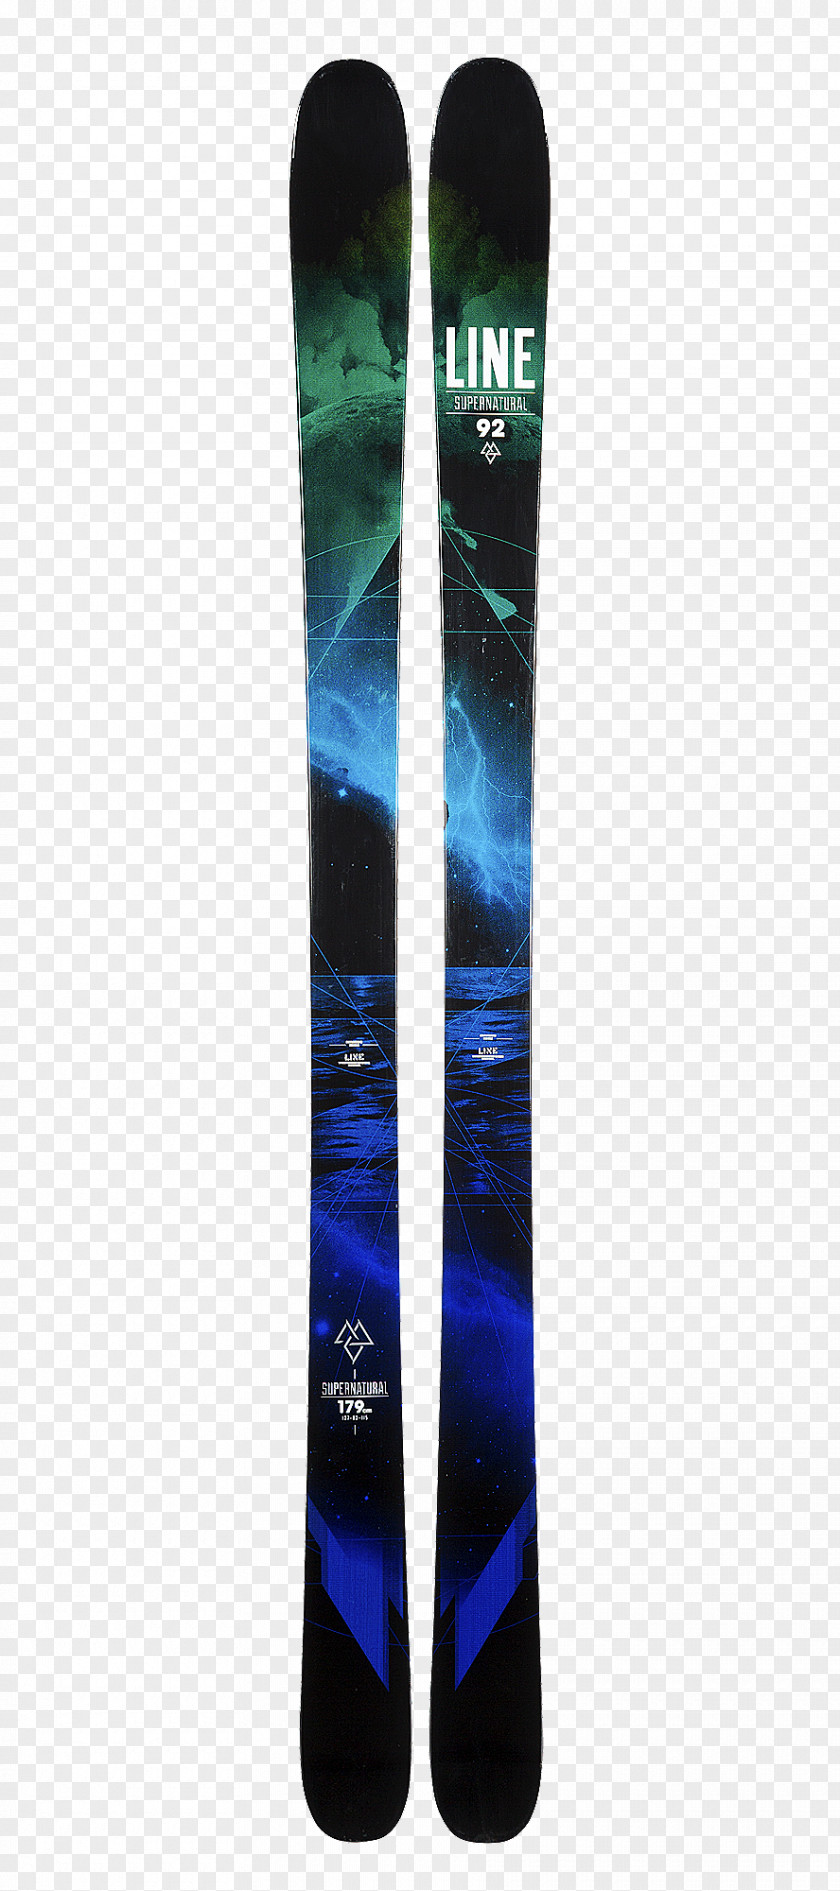 Ski Bindings Line Skis Supernatural 92 2015/16 Skiing PNG